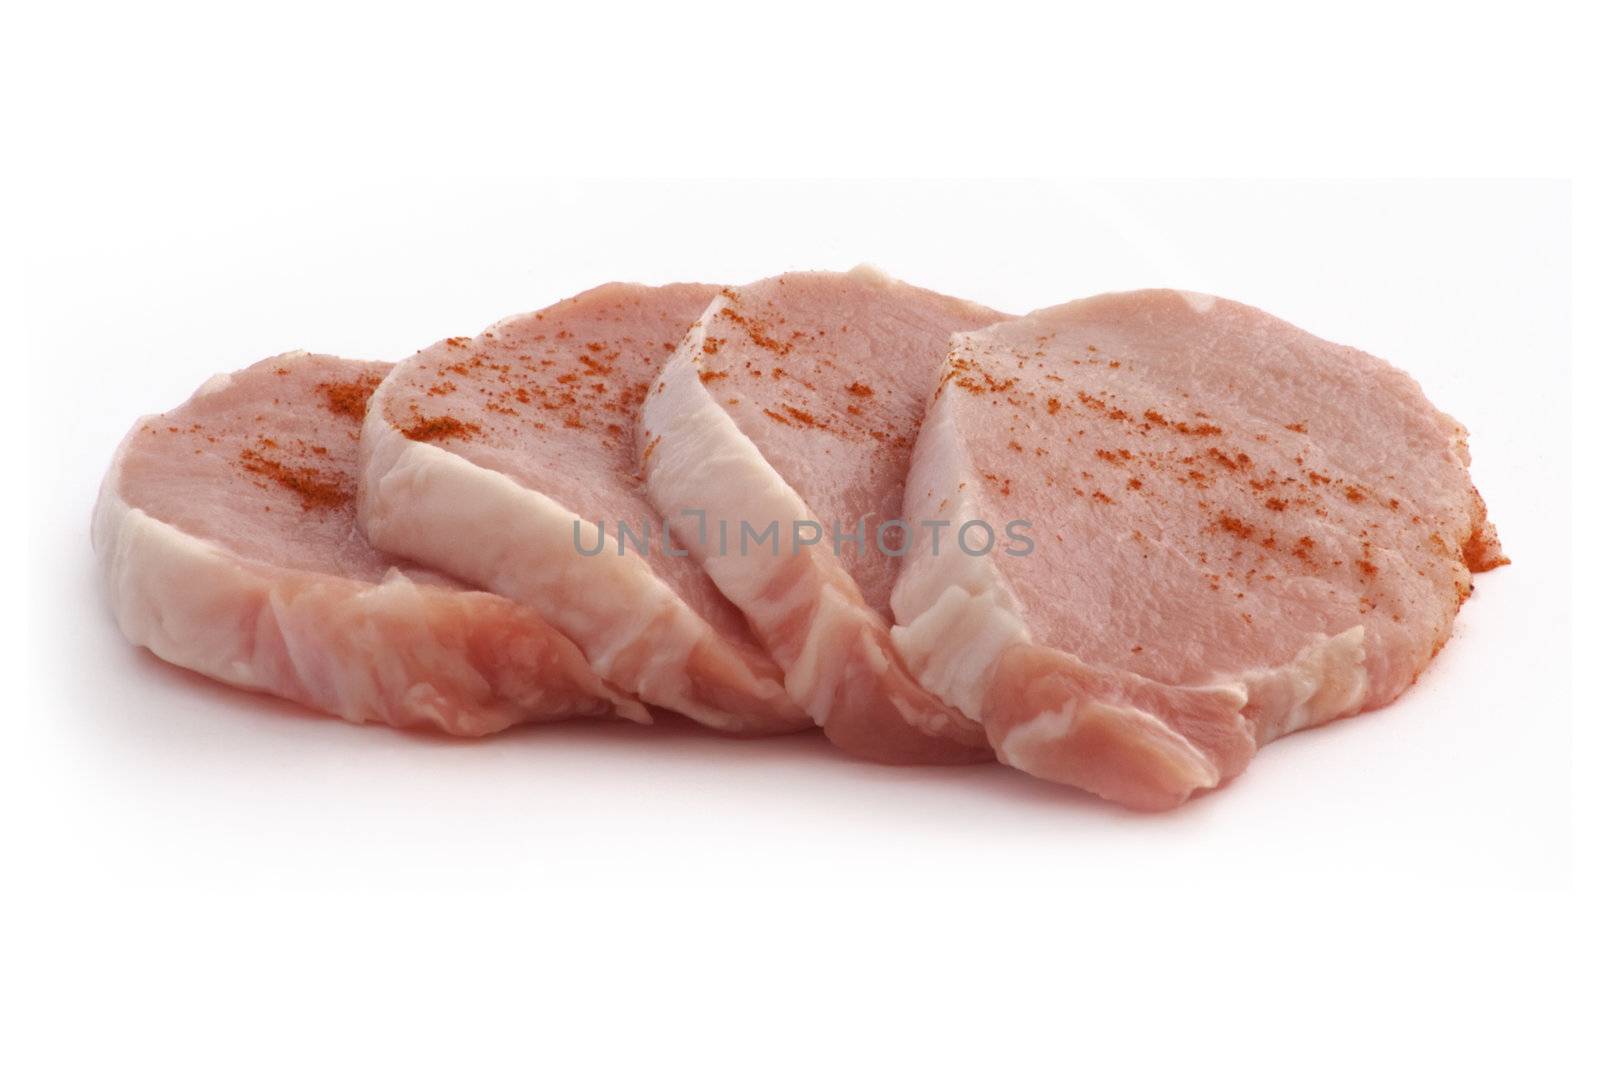 four pieces of raw pork on a white background